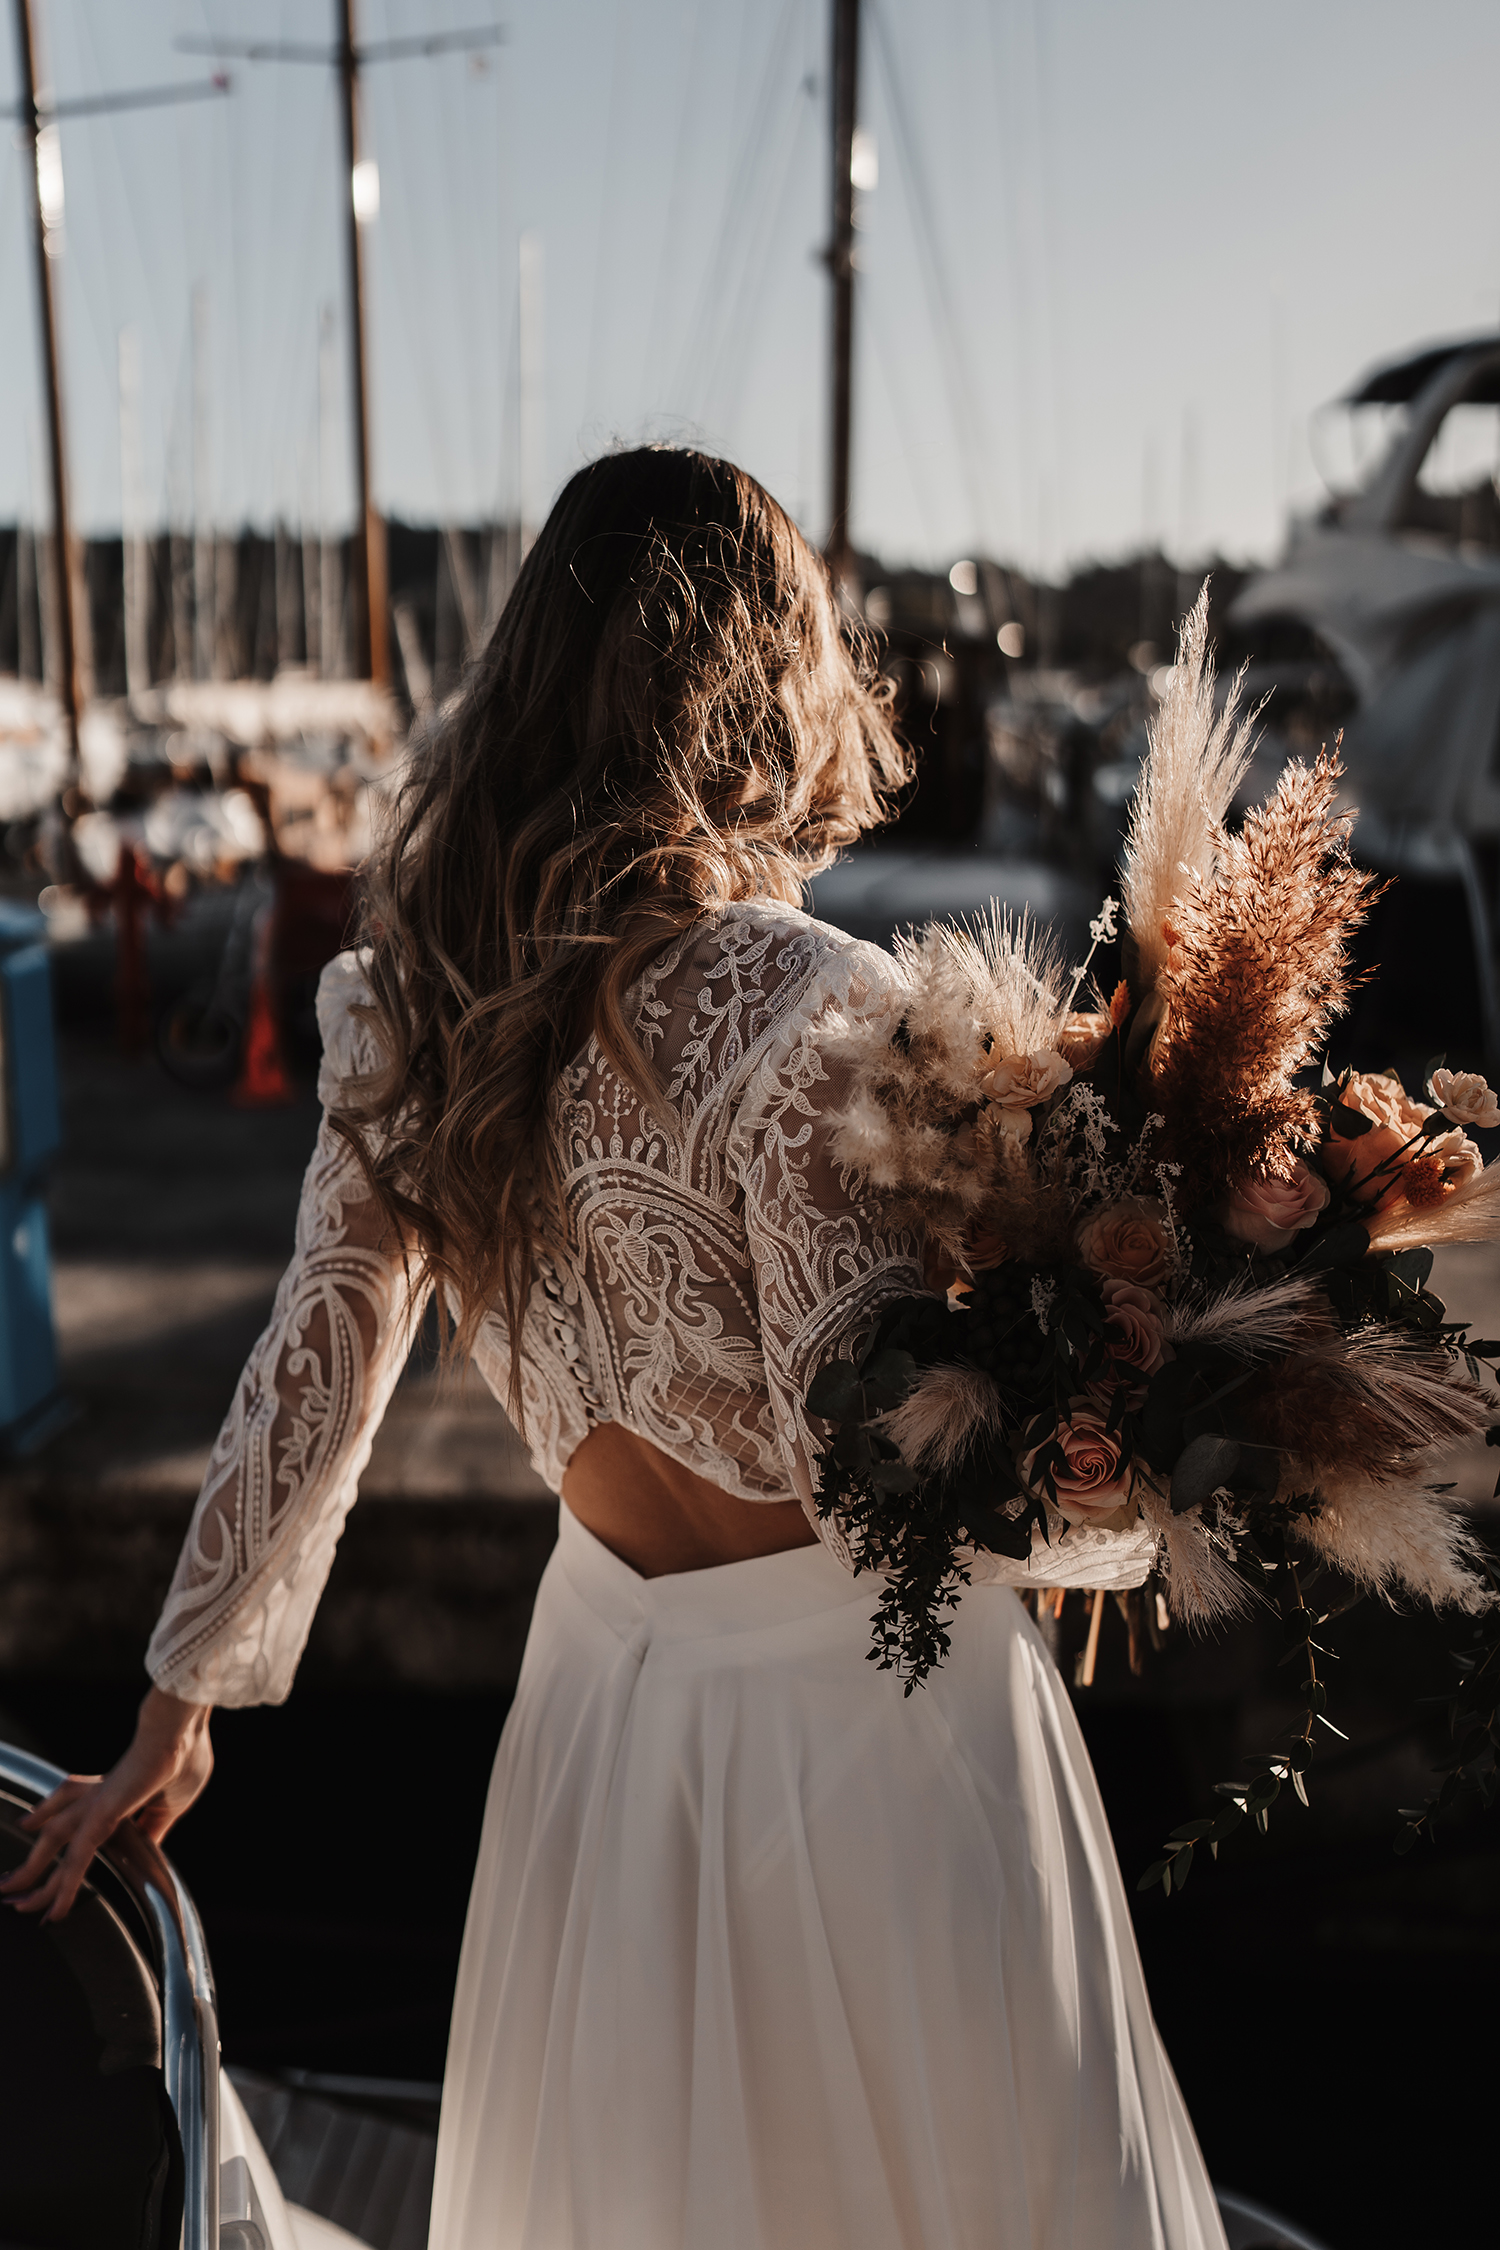 Yacht Wedding Photoshoot by Tamara Bellis